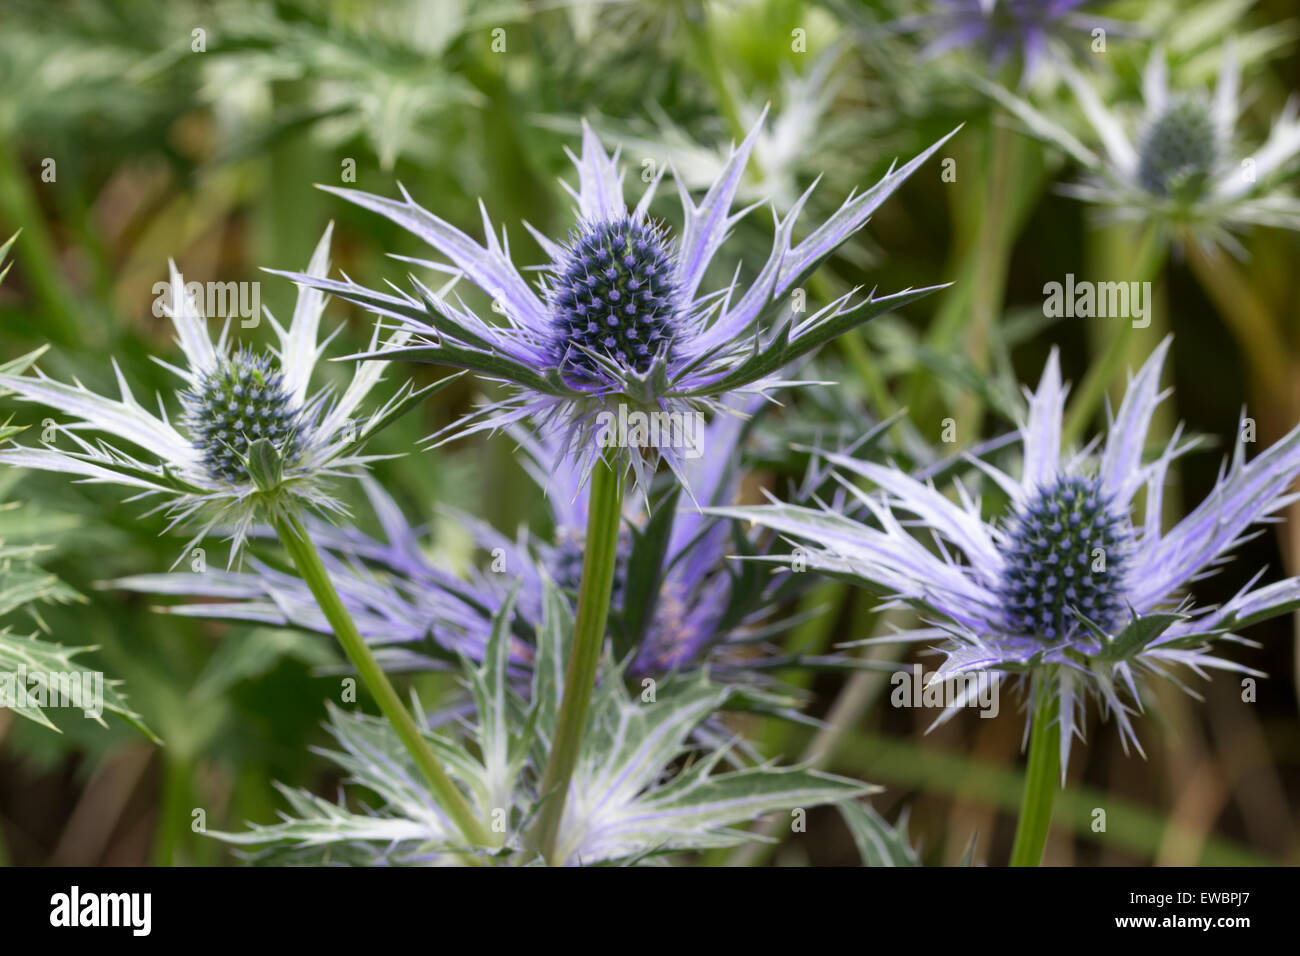 Large spiky flower heads of the sea holly, Eryngium x zabelii 'Big Blue' Stock Photo